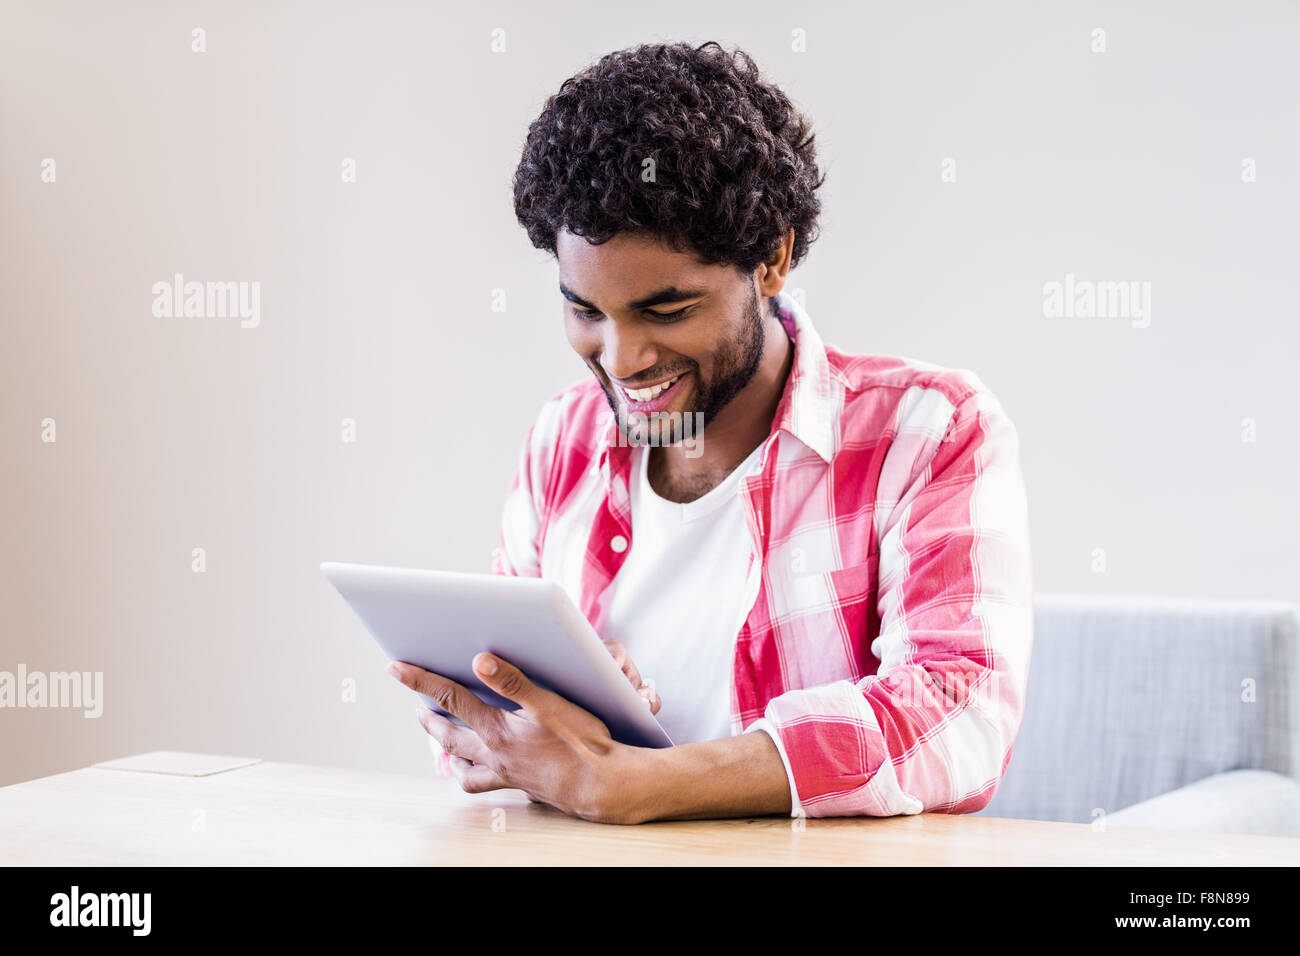 Smiling man using tablet Banque D'Images